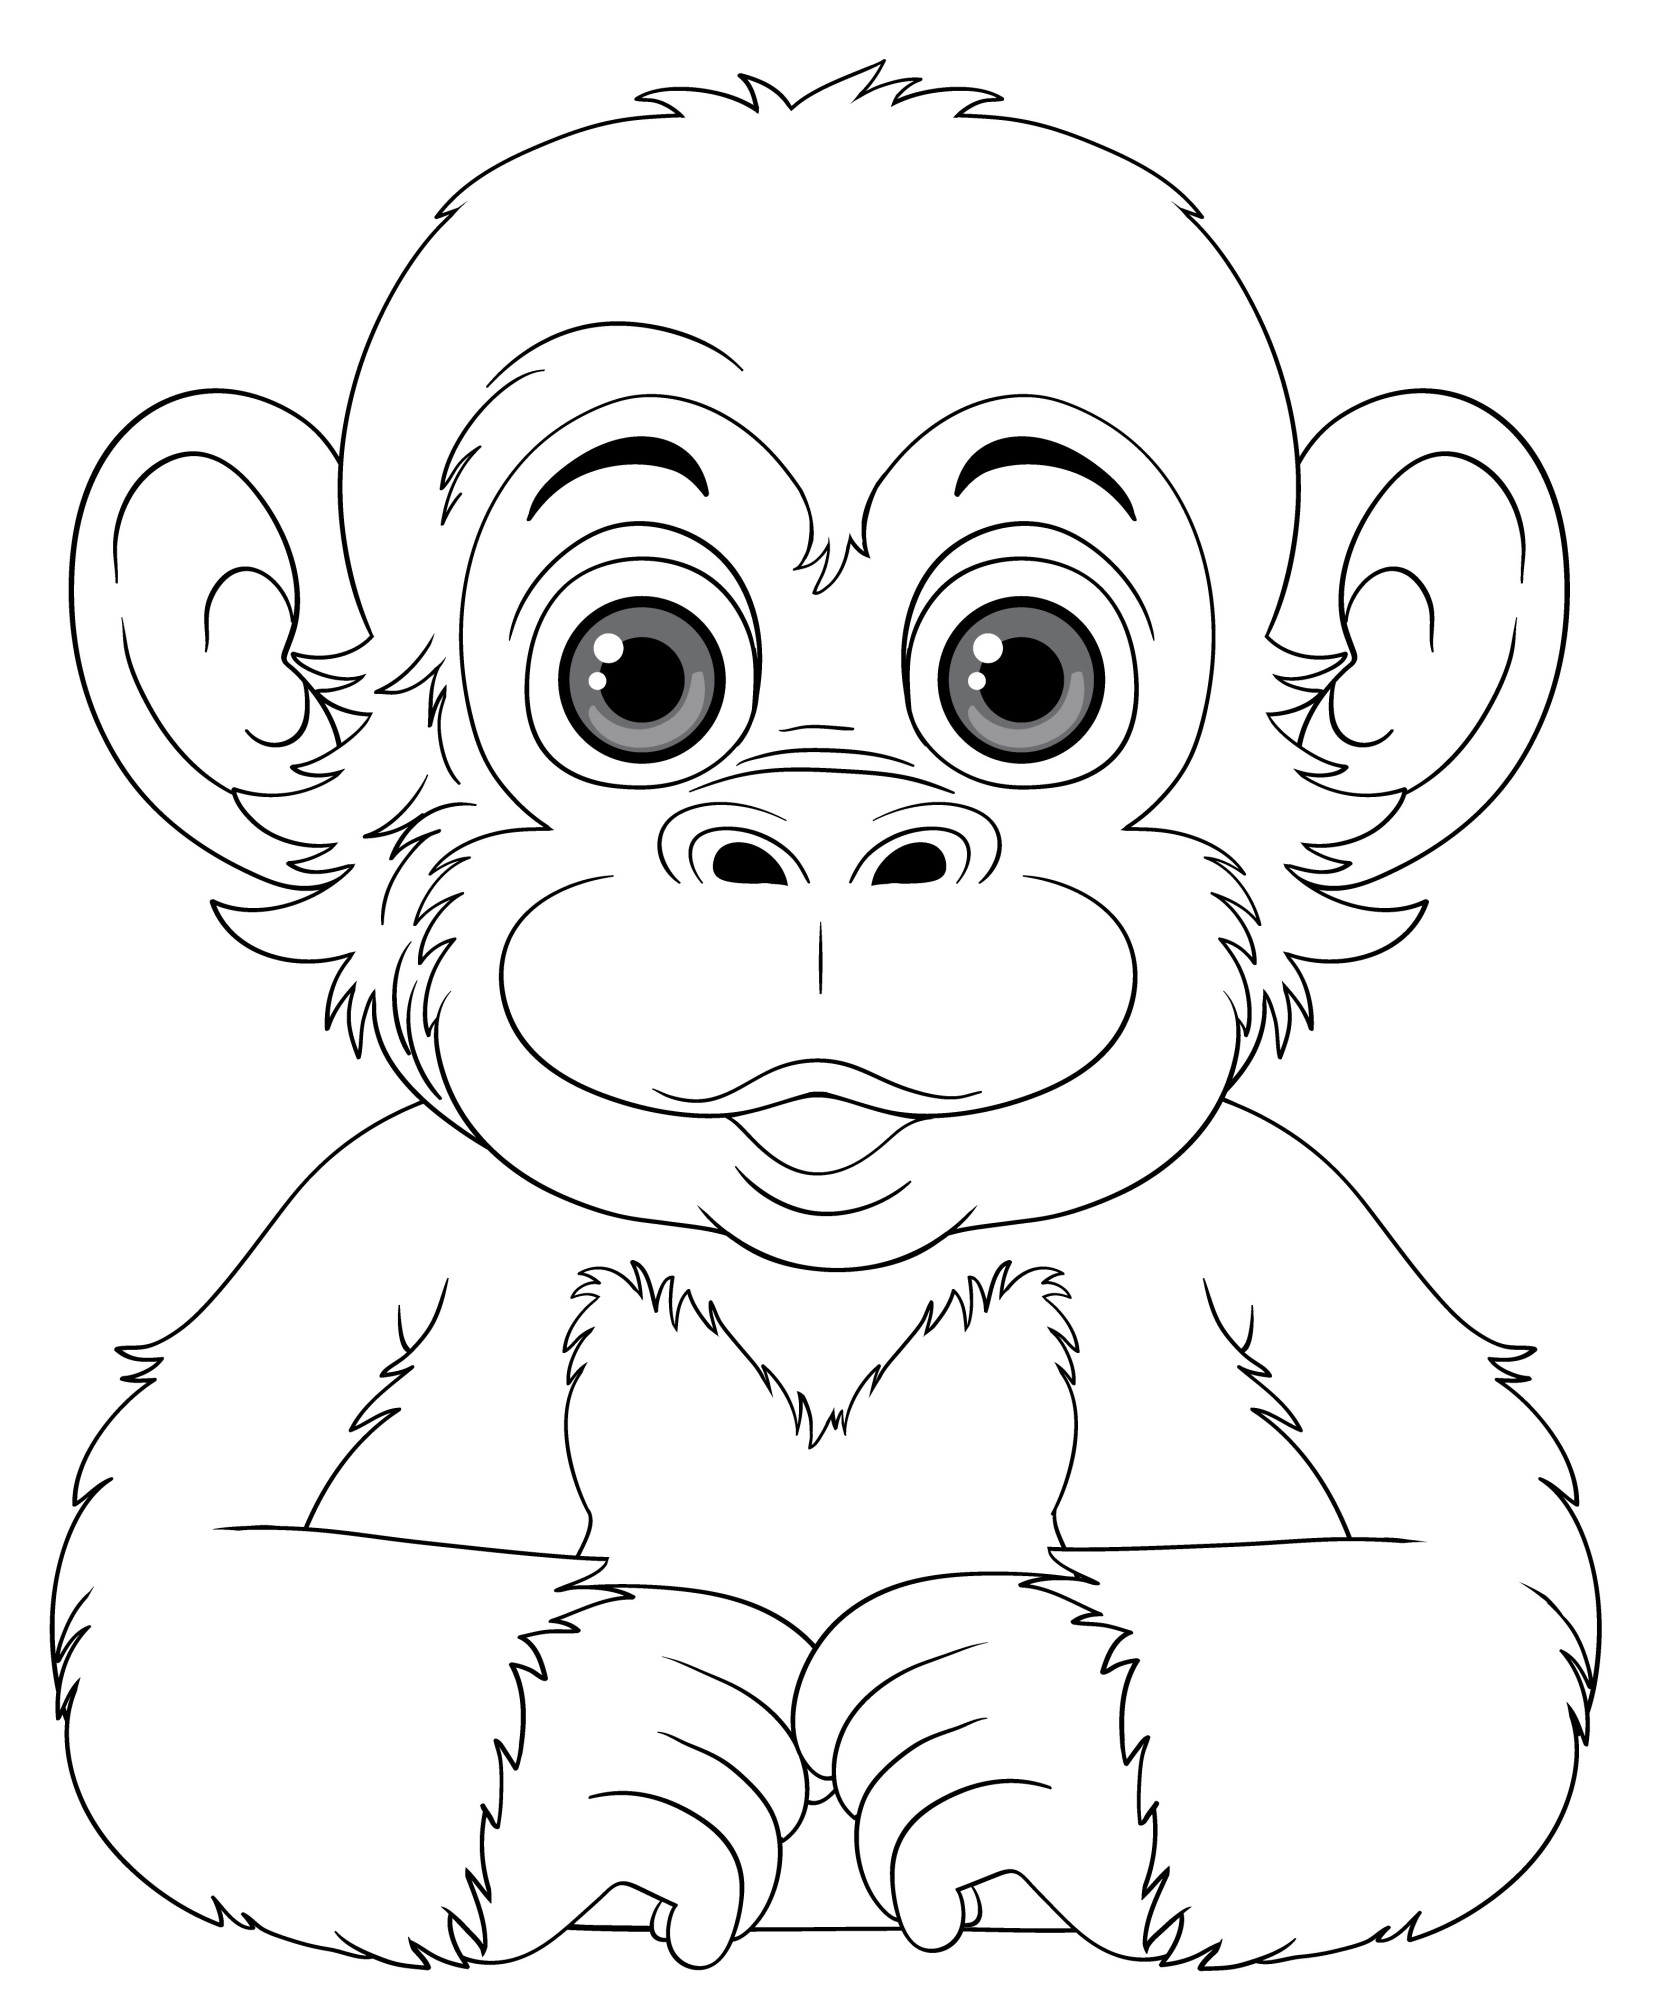 Раскраска для детей: обезьяна шимпанзе сидит за партой